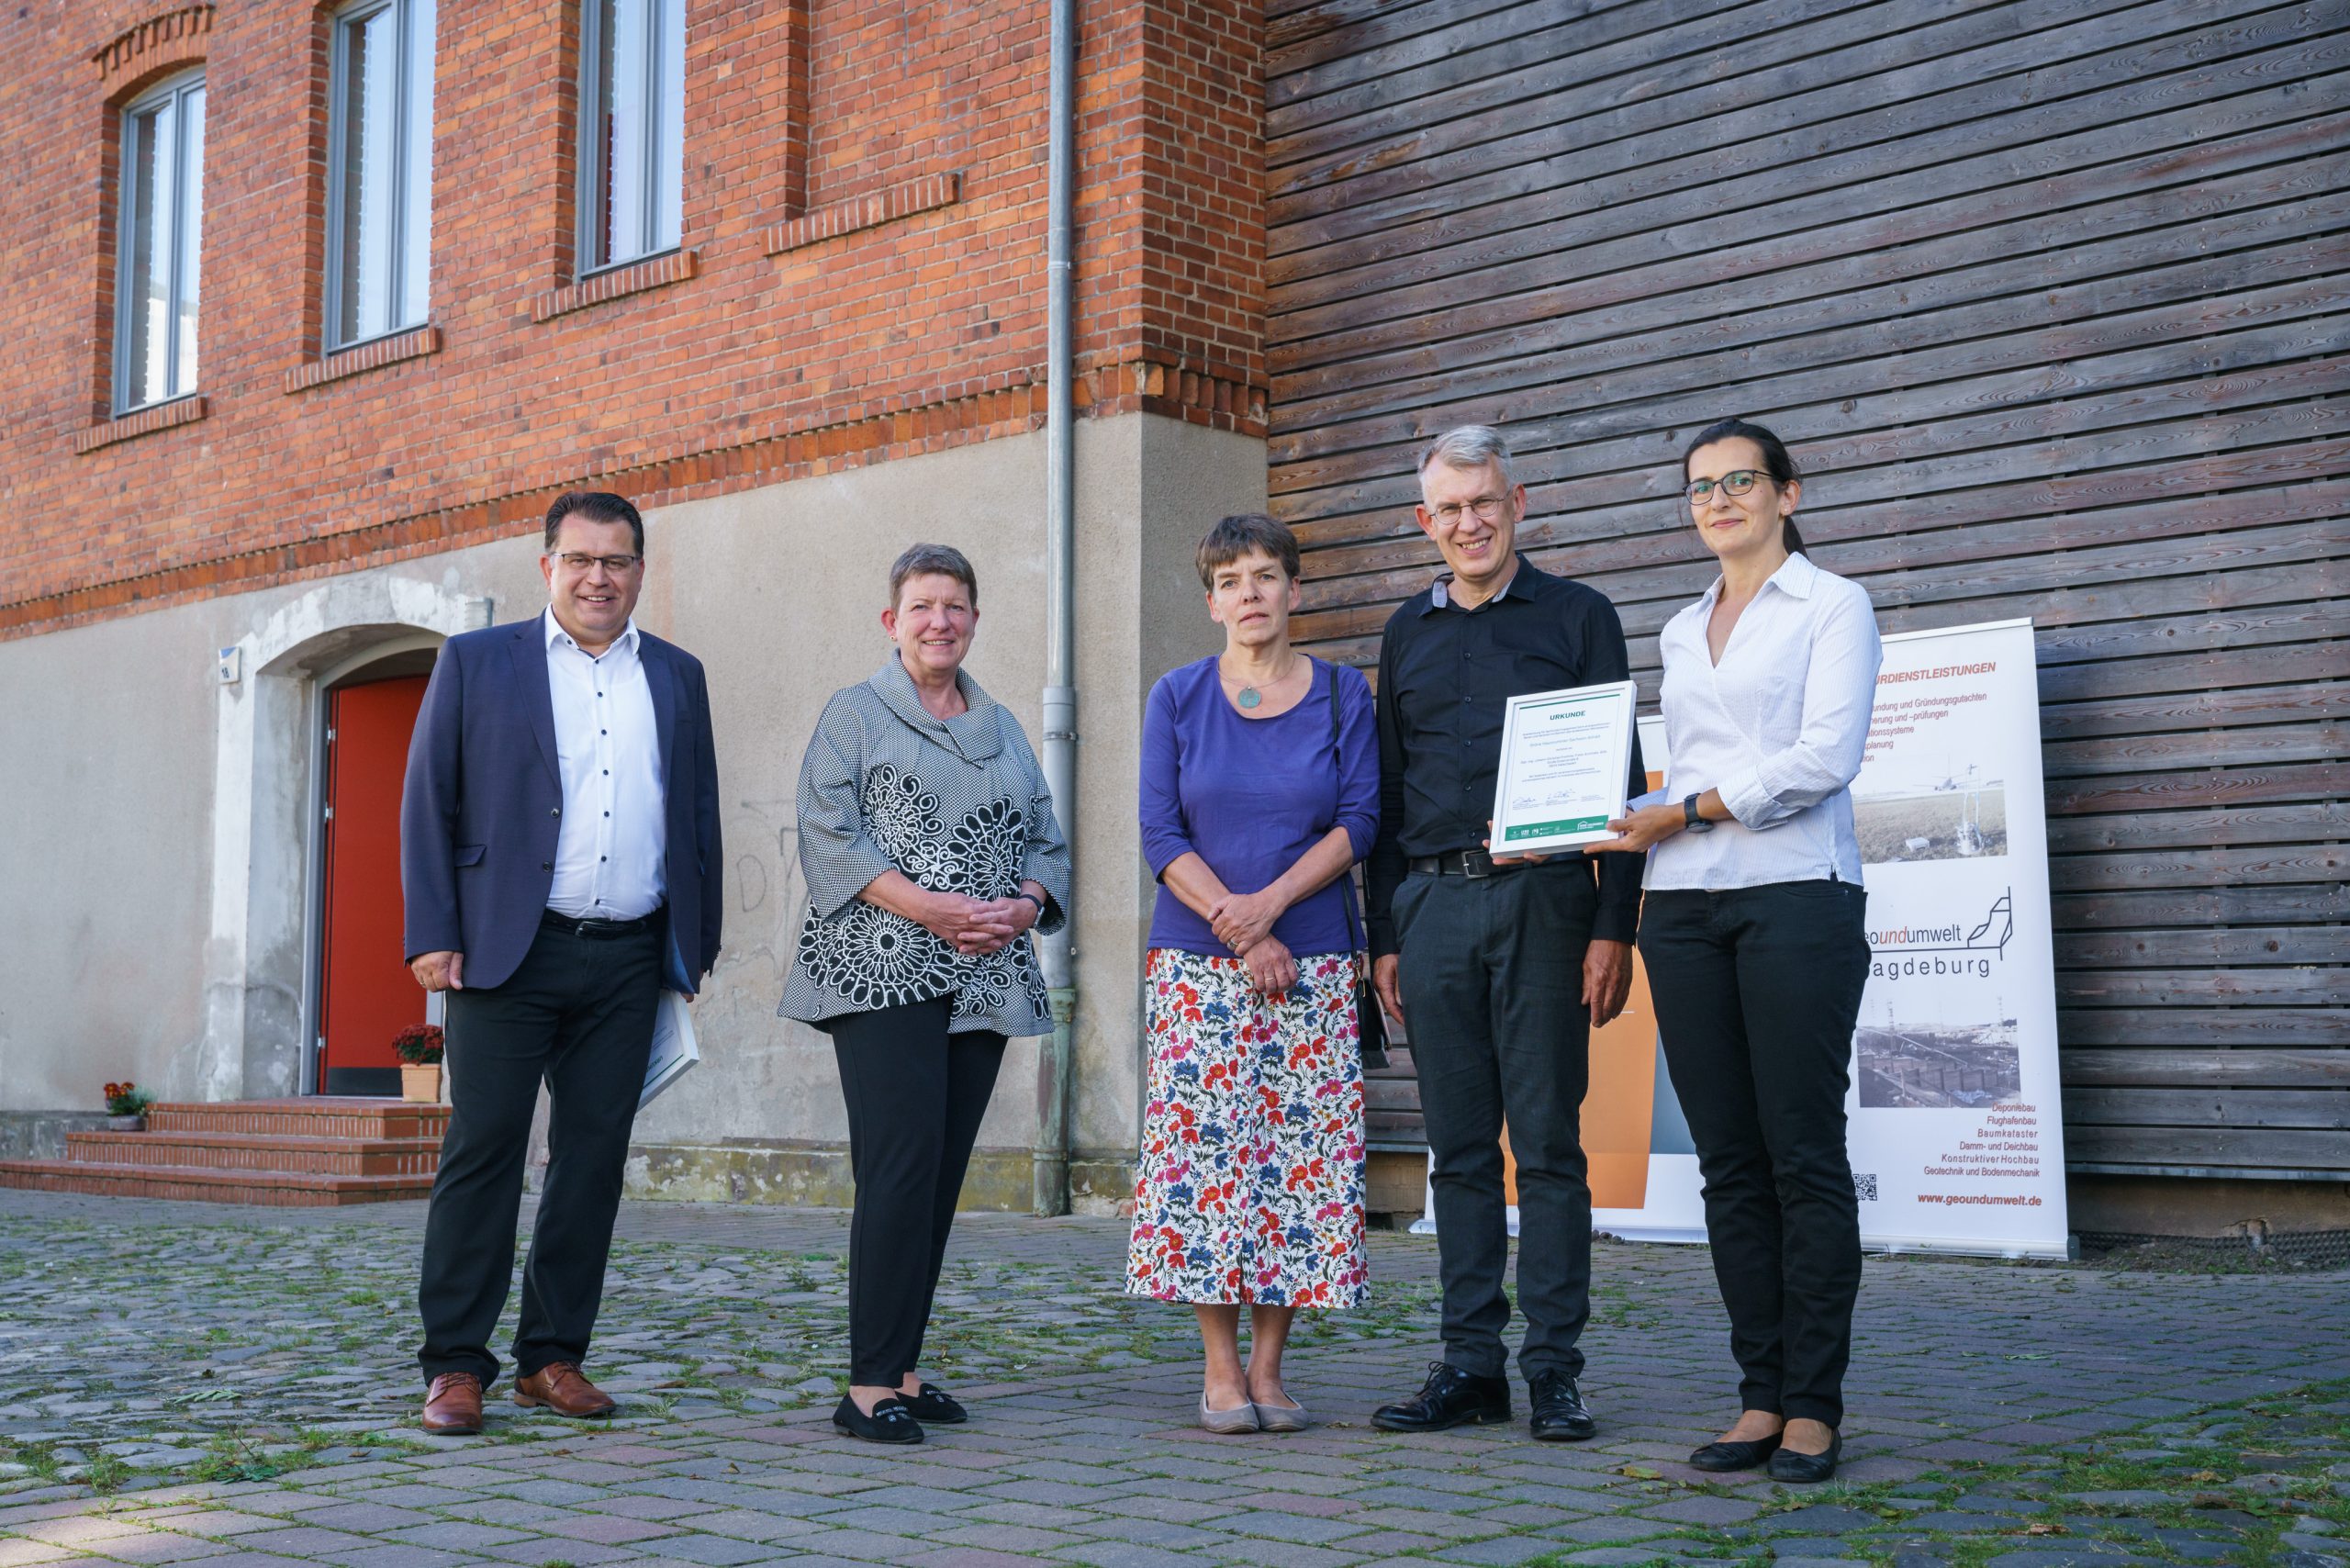 Verleihung der Grünen Hausnummer durch Frau Professorin Dalbert an das Architekturbüro Fromme